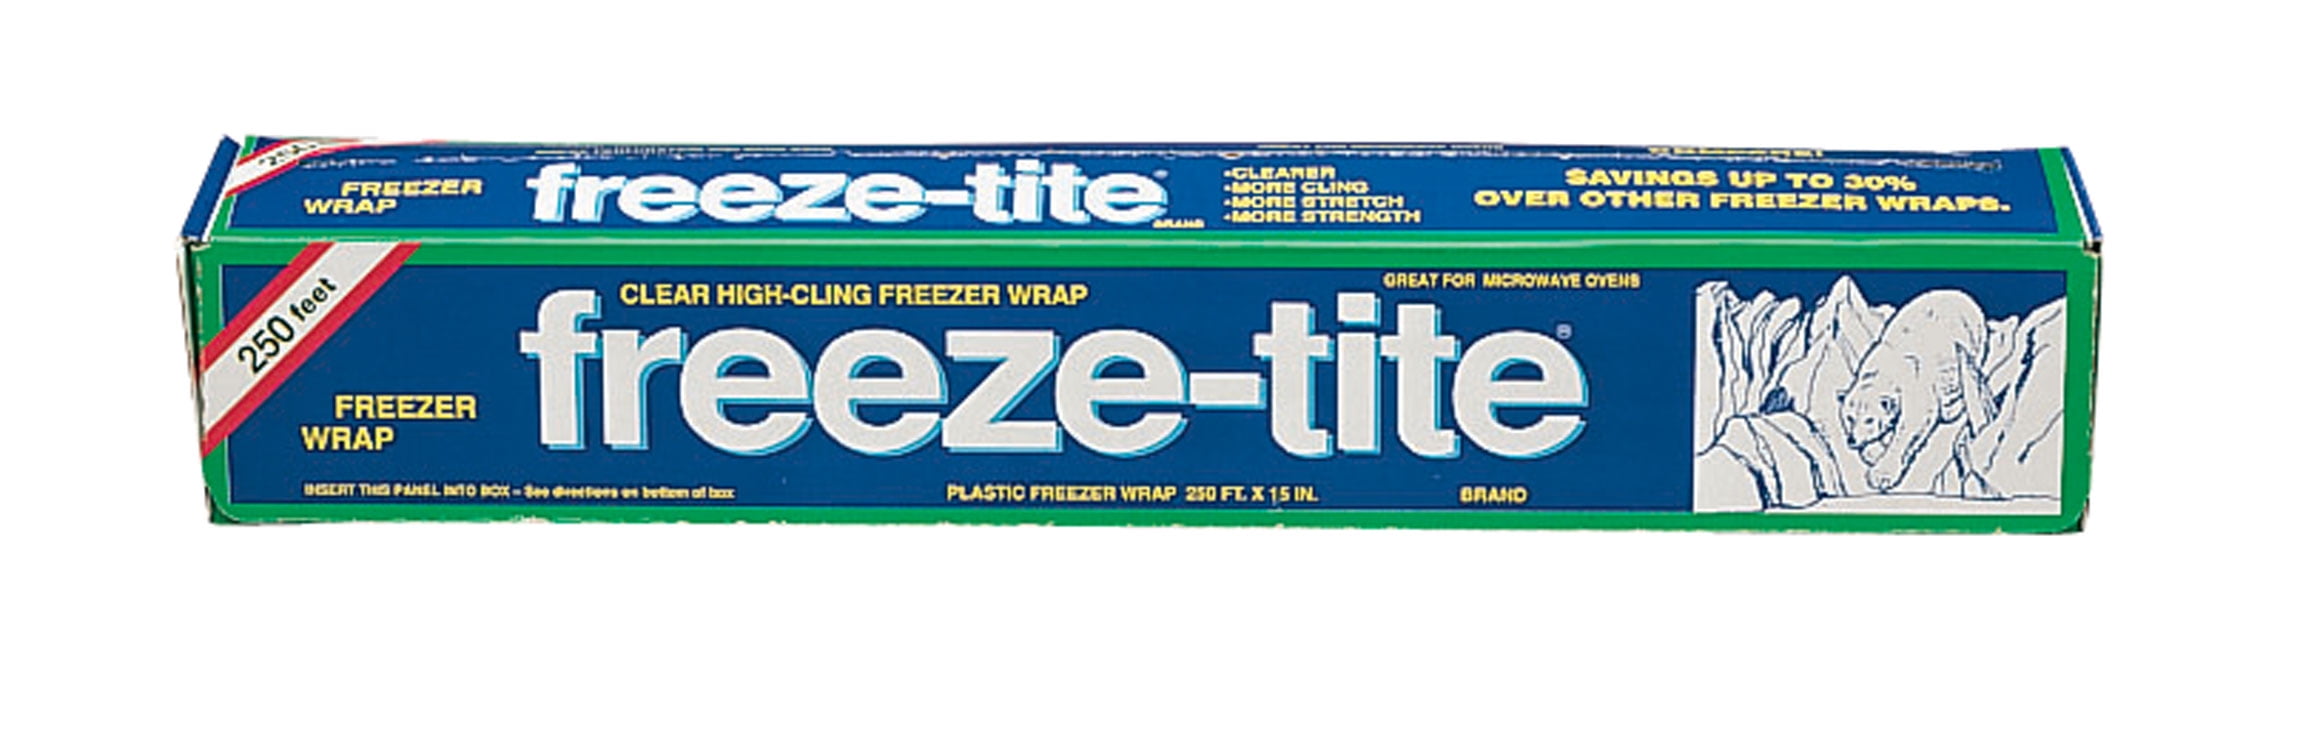  Stretch-Tite's Freeze-Tite Premium Plastic Freezer